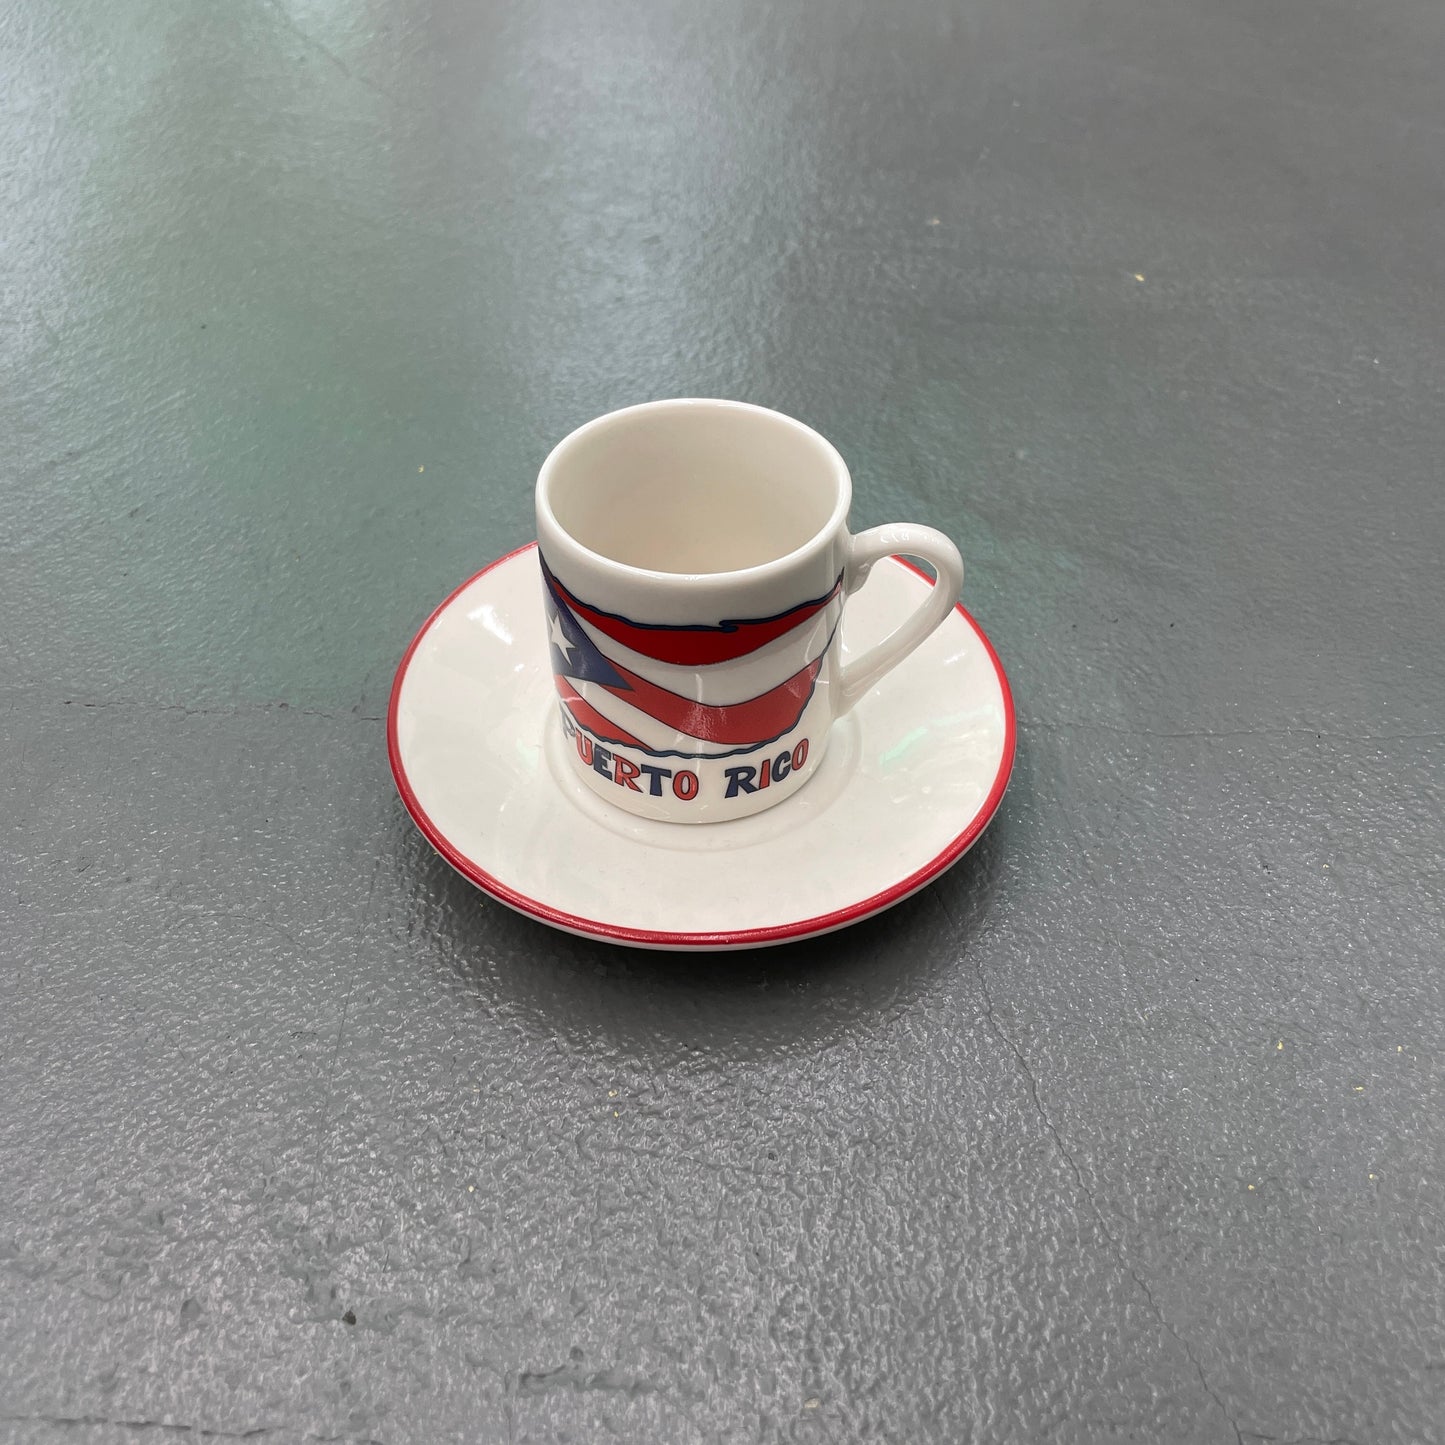 Puerto Rico Mini Espresso Cup & Saucer